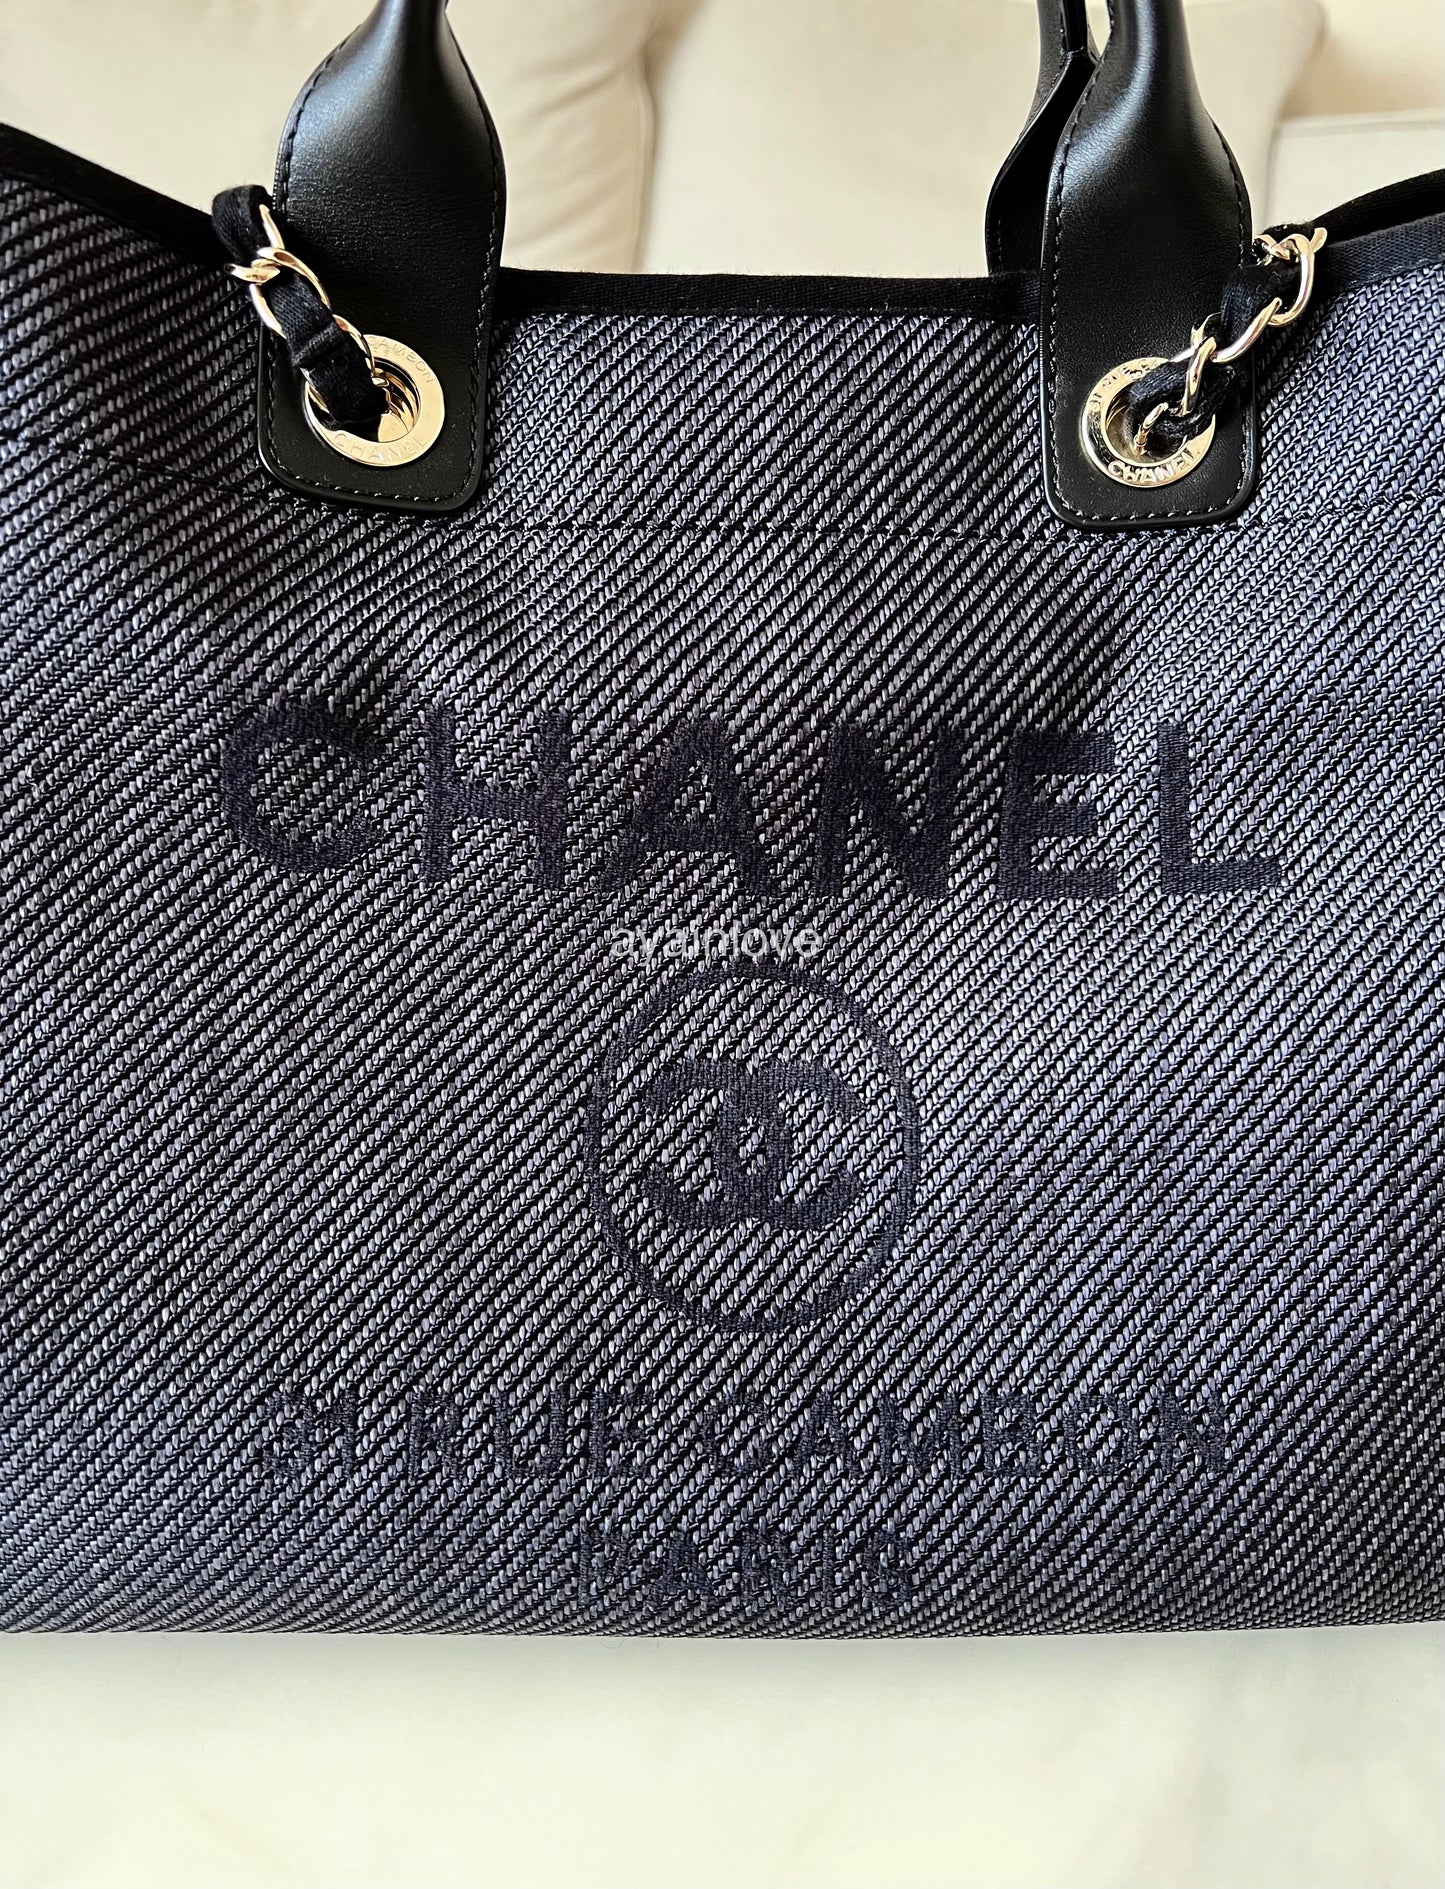 CHANEL Navy Blue Canvas Deauville Medium Tote Bag 2020 Light Gold Hardware